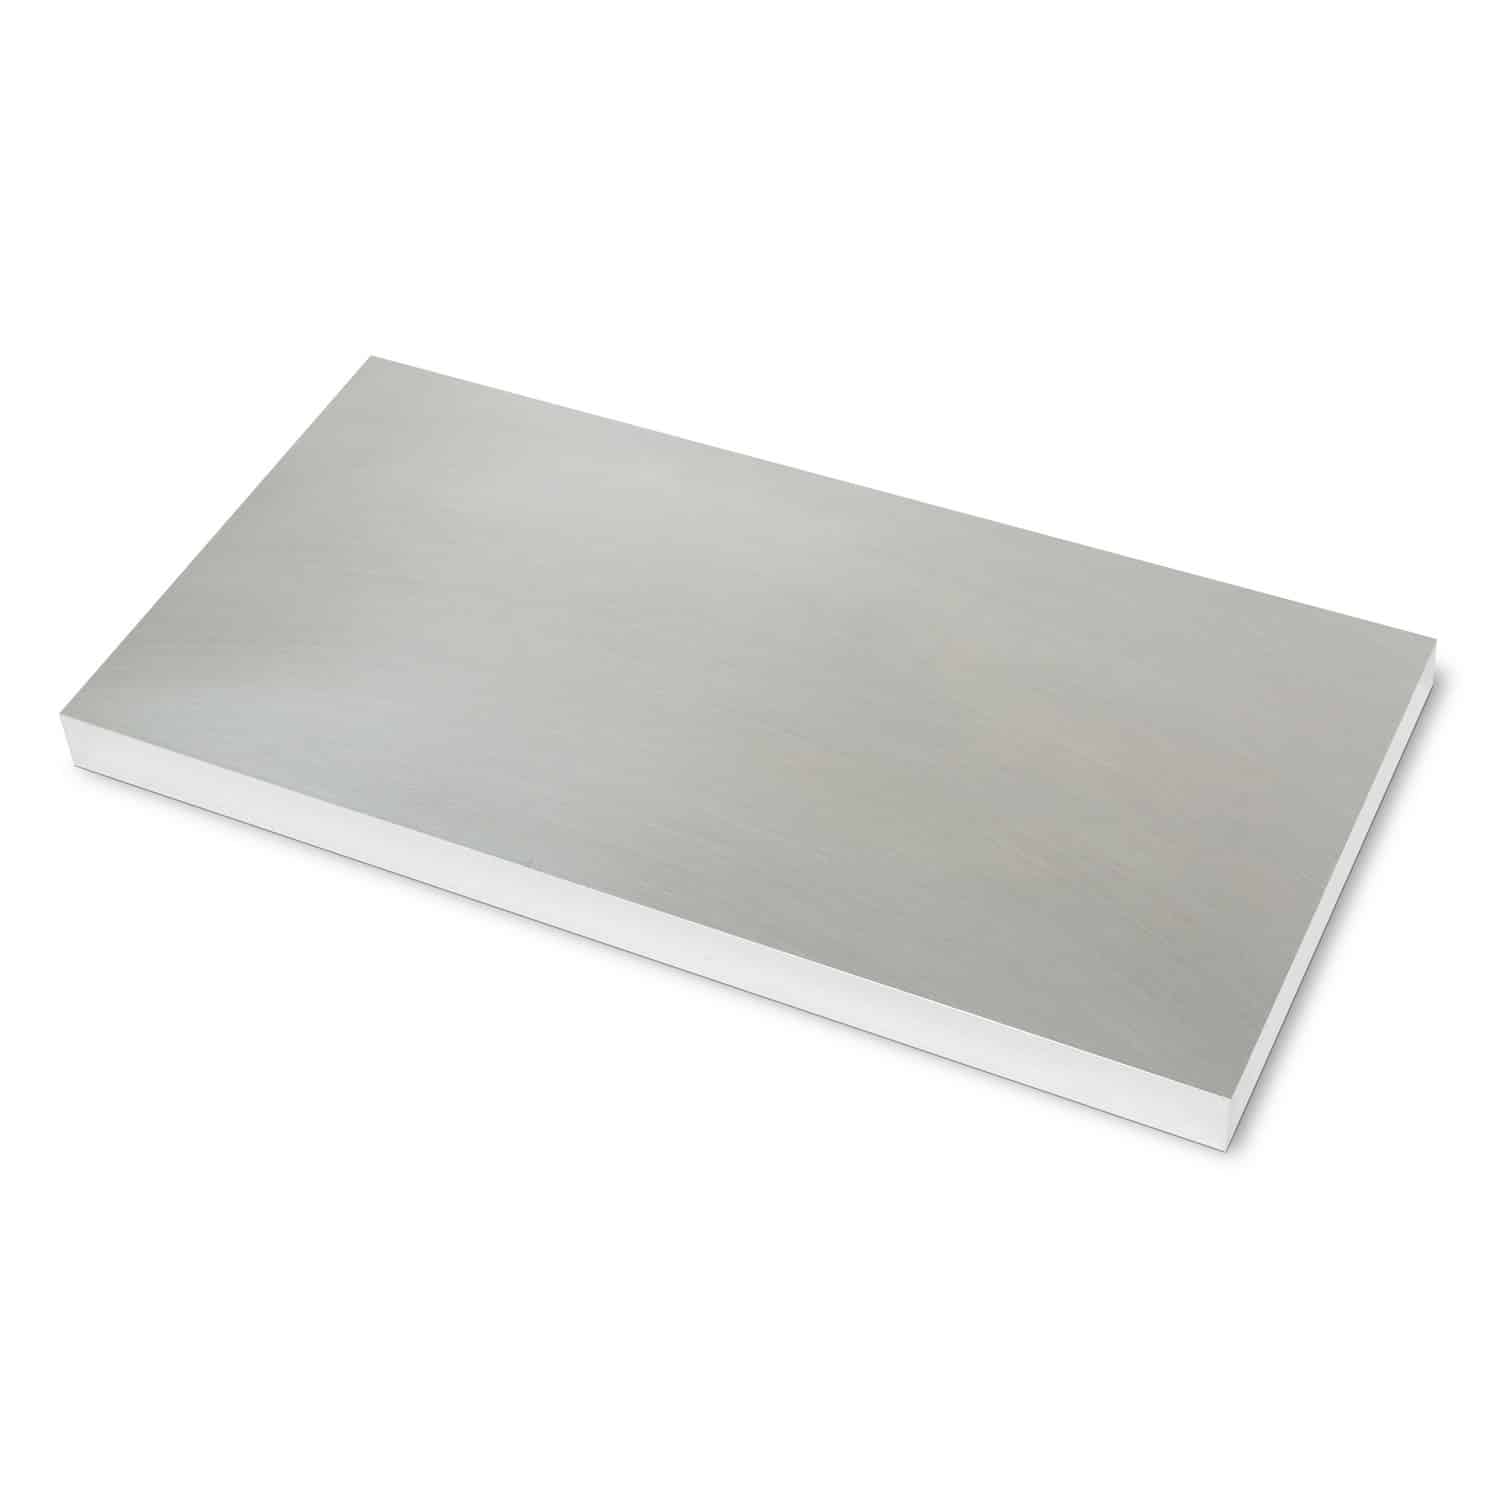 A36 Steel Plate  Midwest Steel & Aluminum